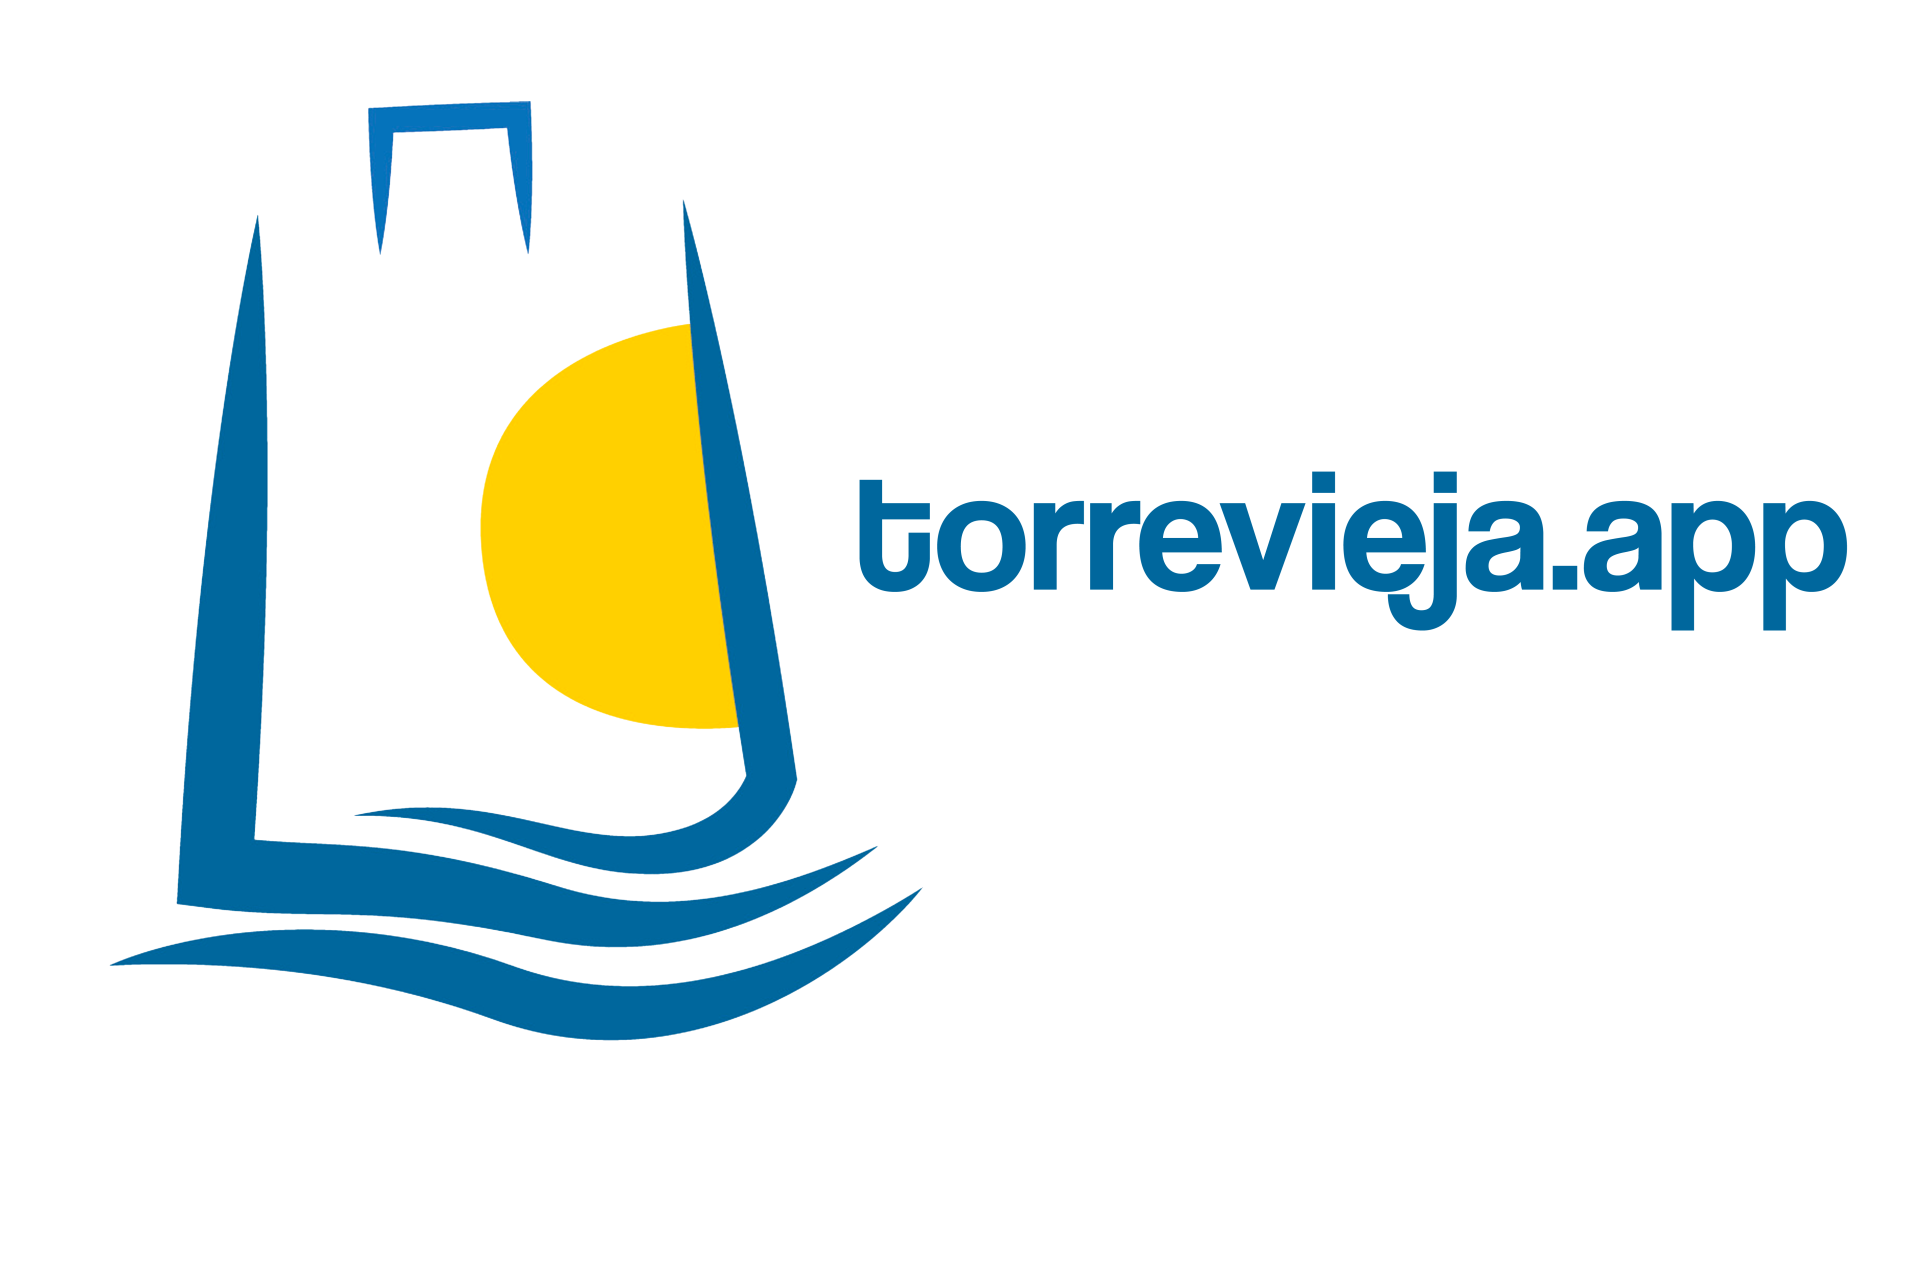 Torrevieja.app